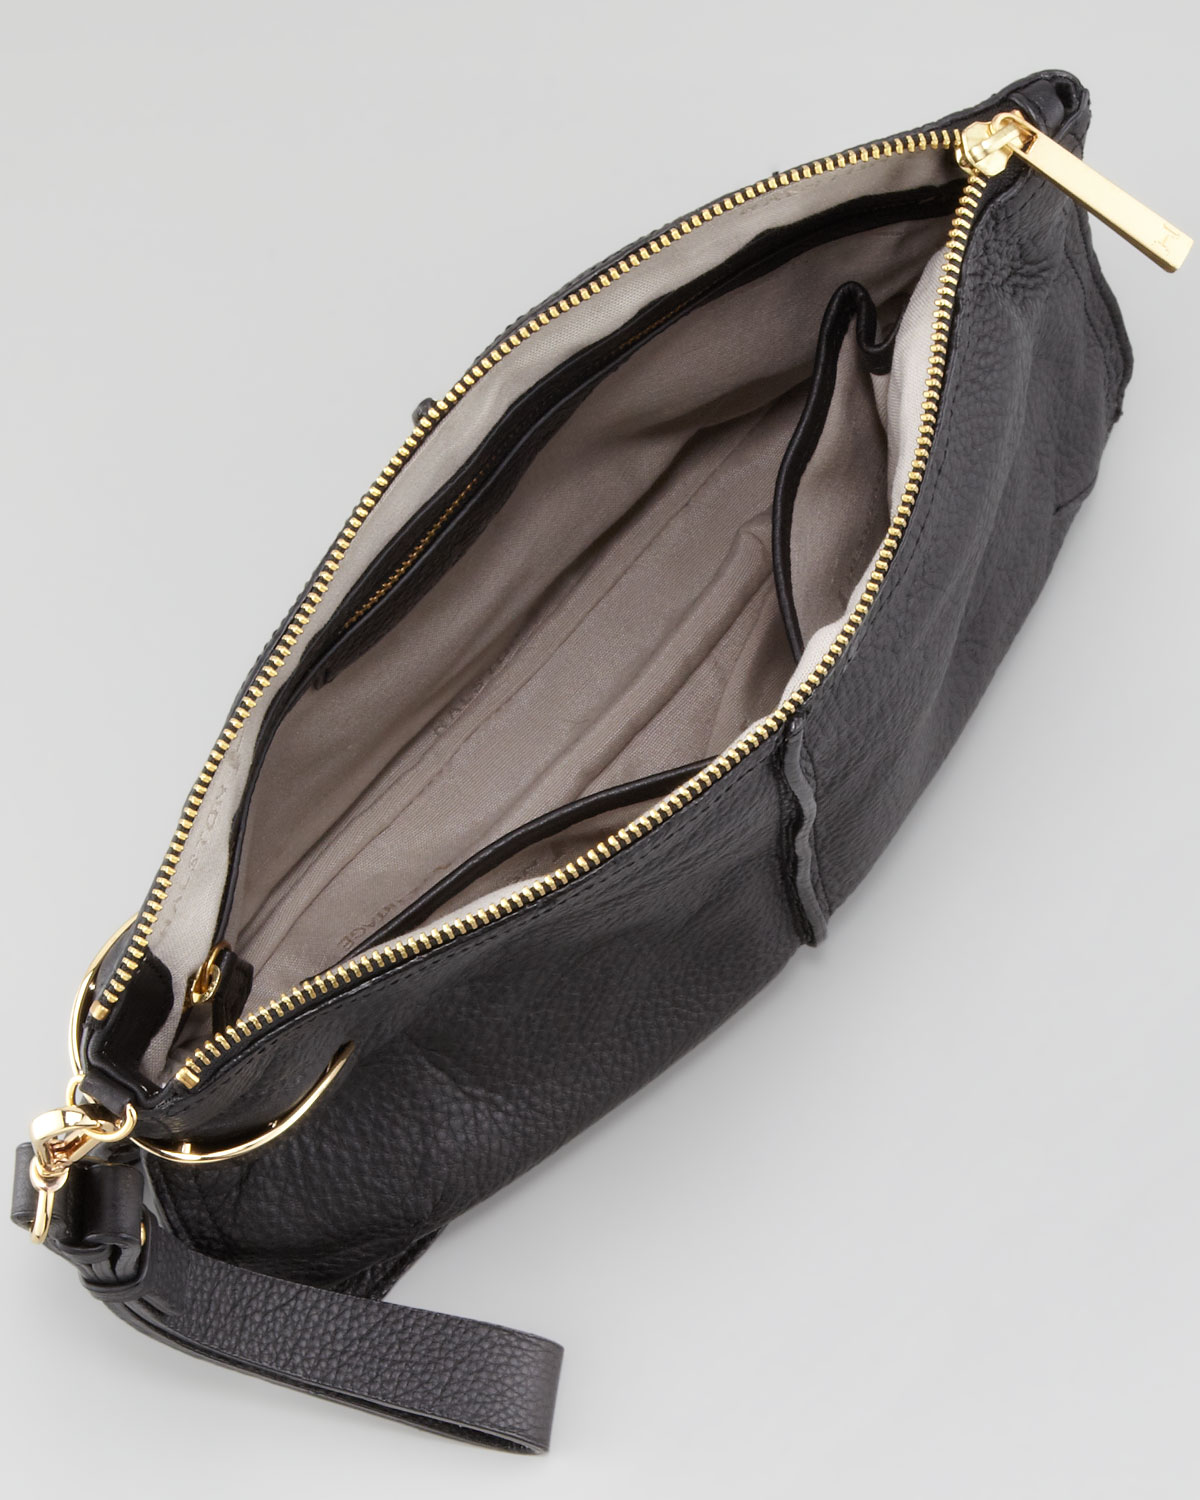 Lyst - Halston Large Leather Wristlet Clutch Bag Black in Black